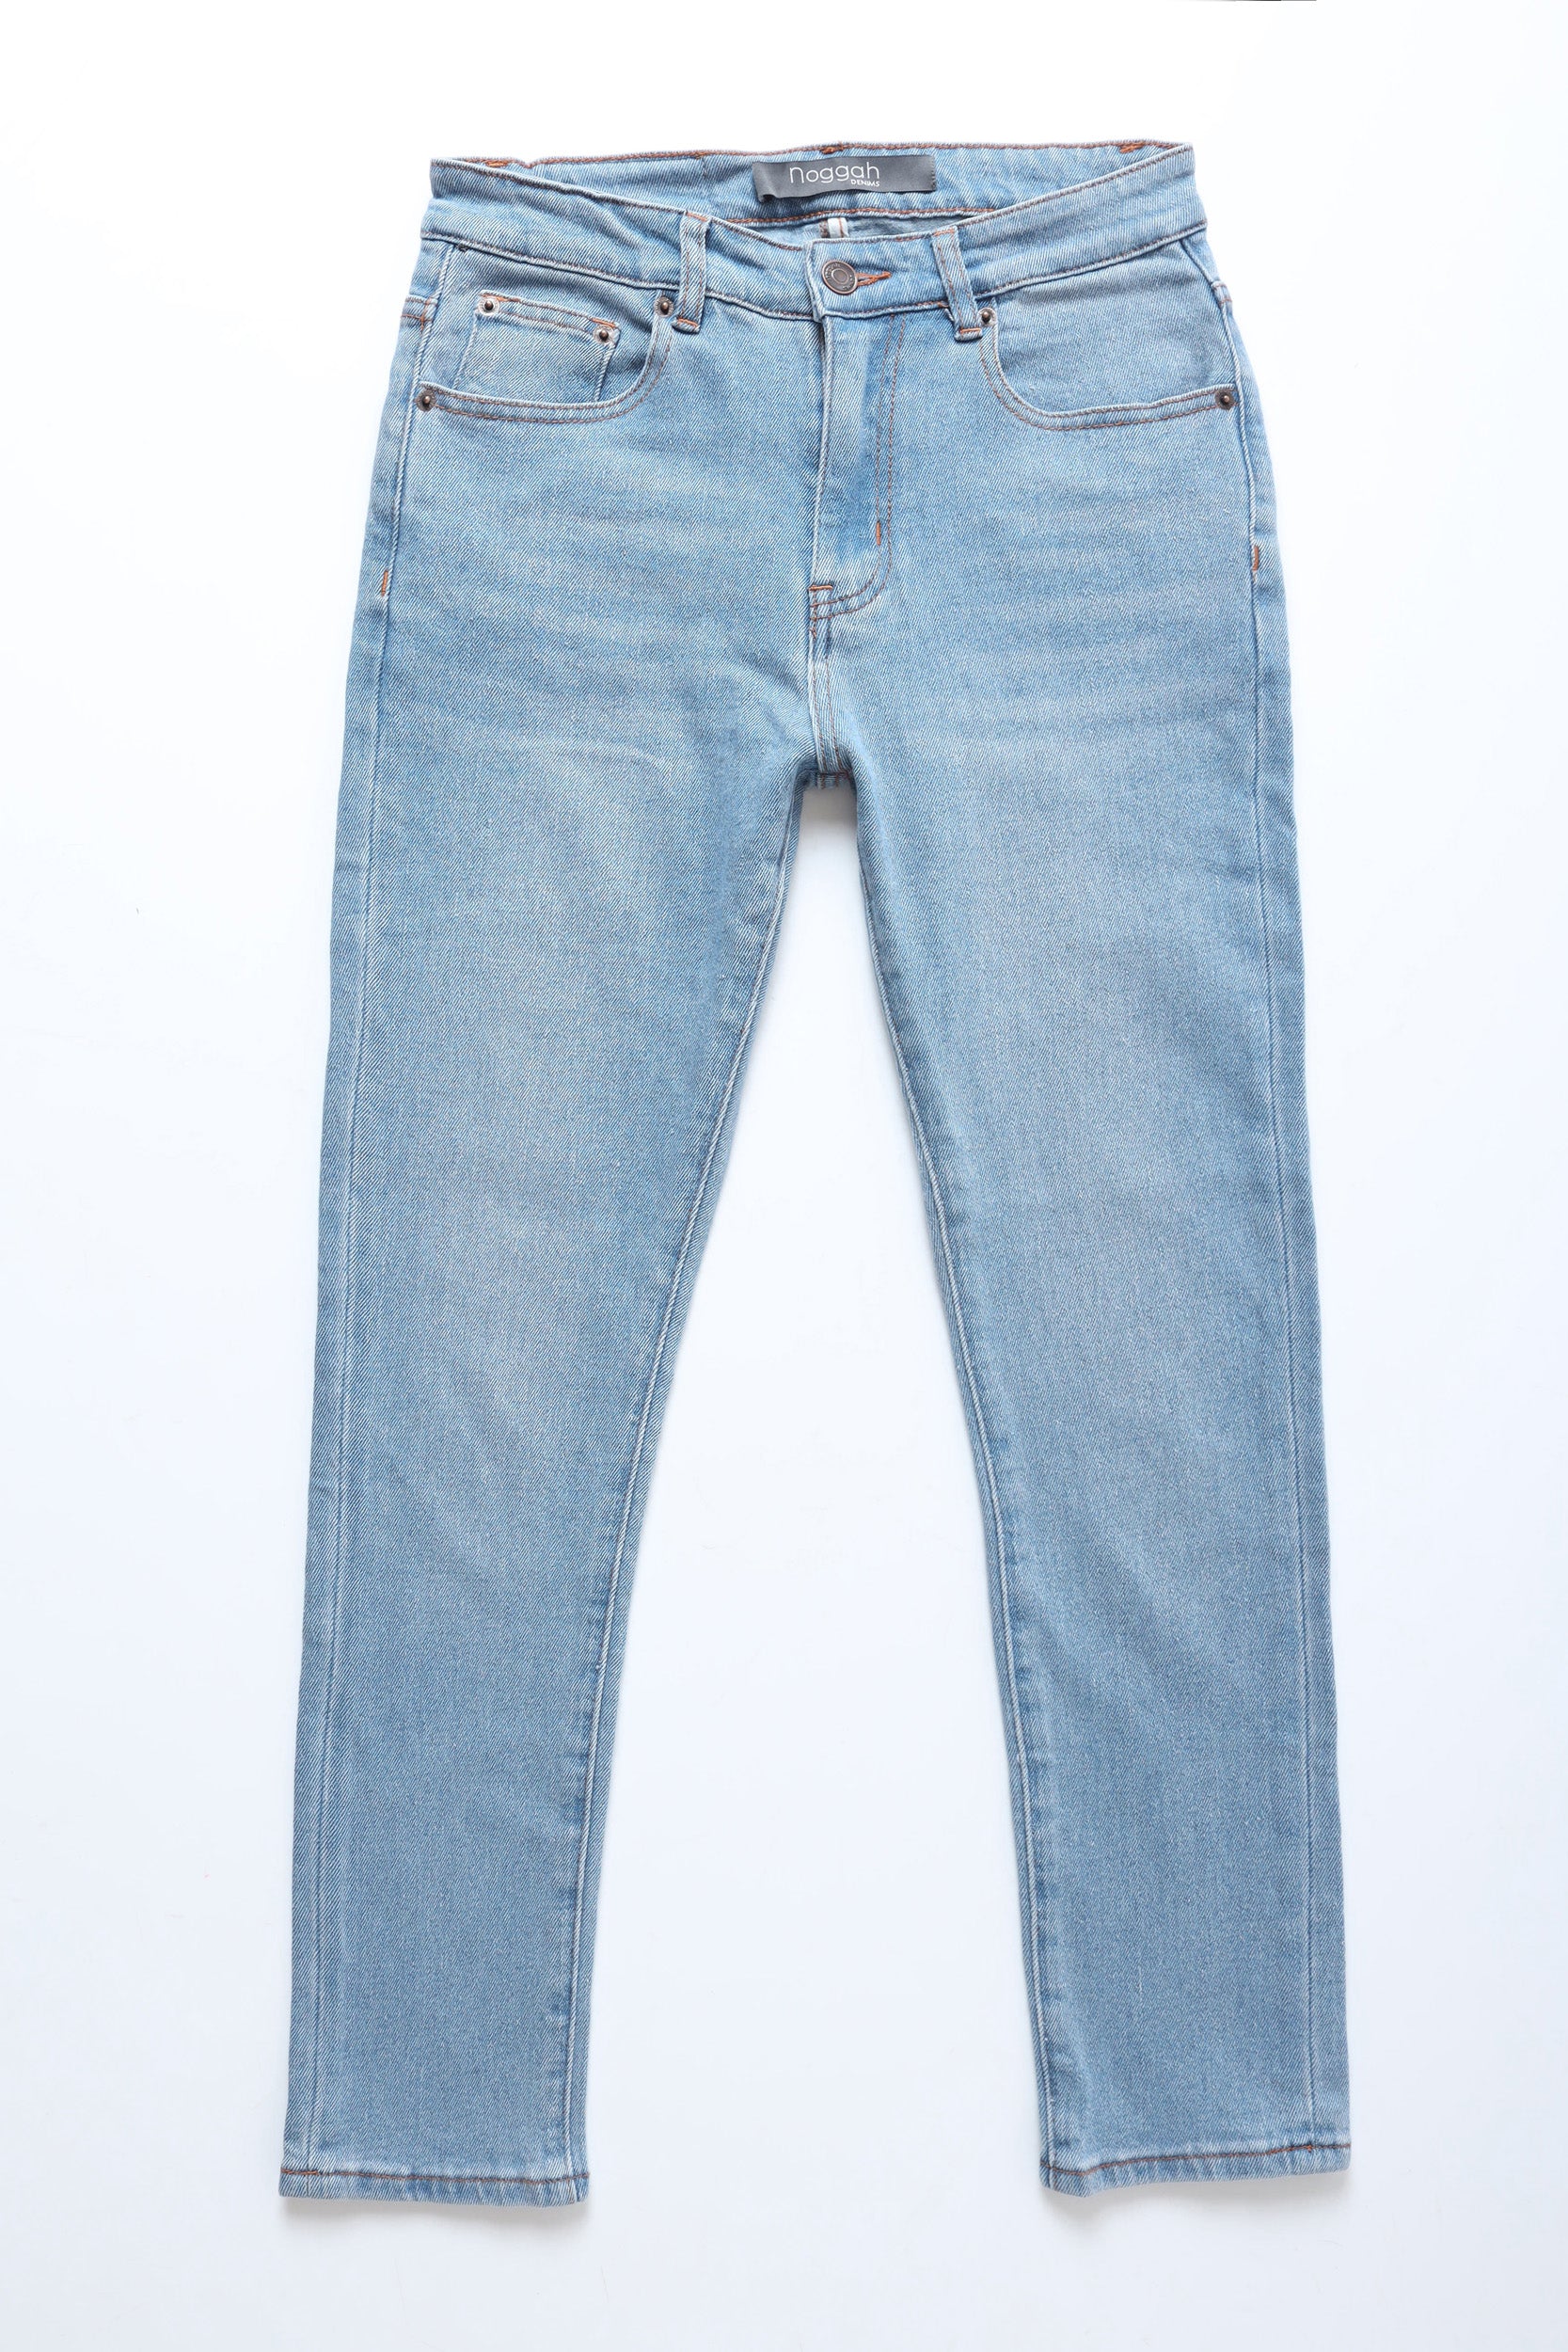 Women's Super skinny Jeans | Light blue | Diesel 1984 Slandy-High